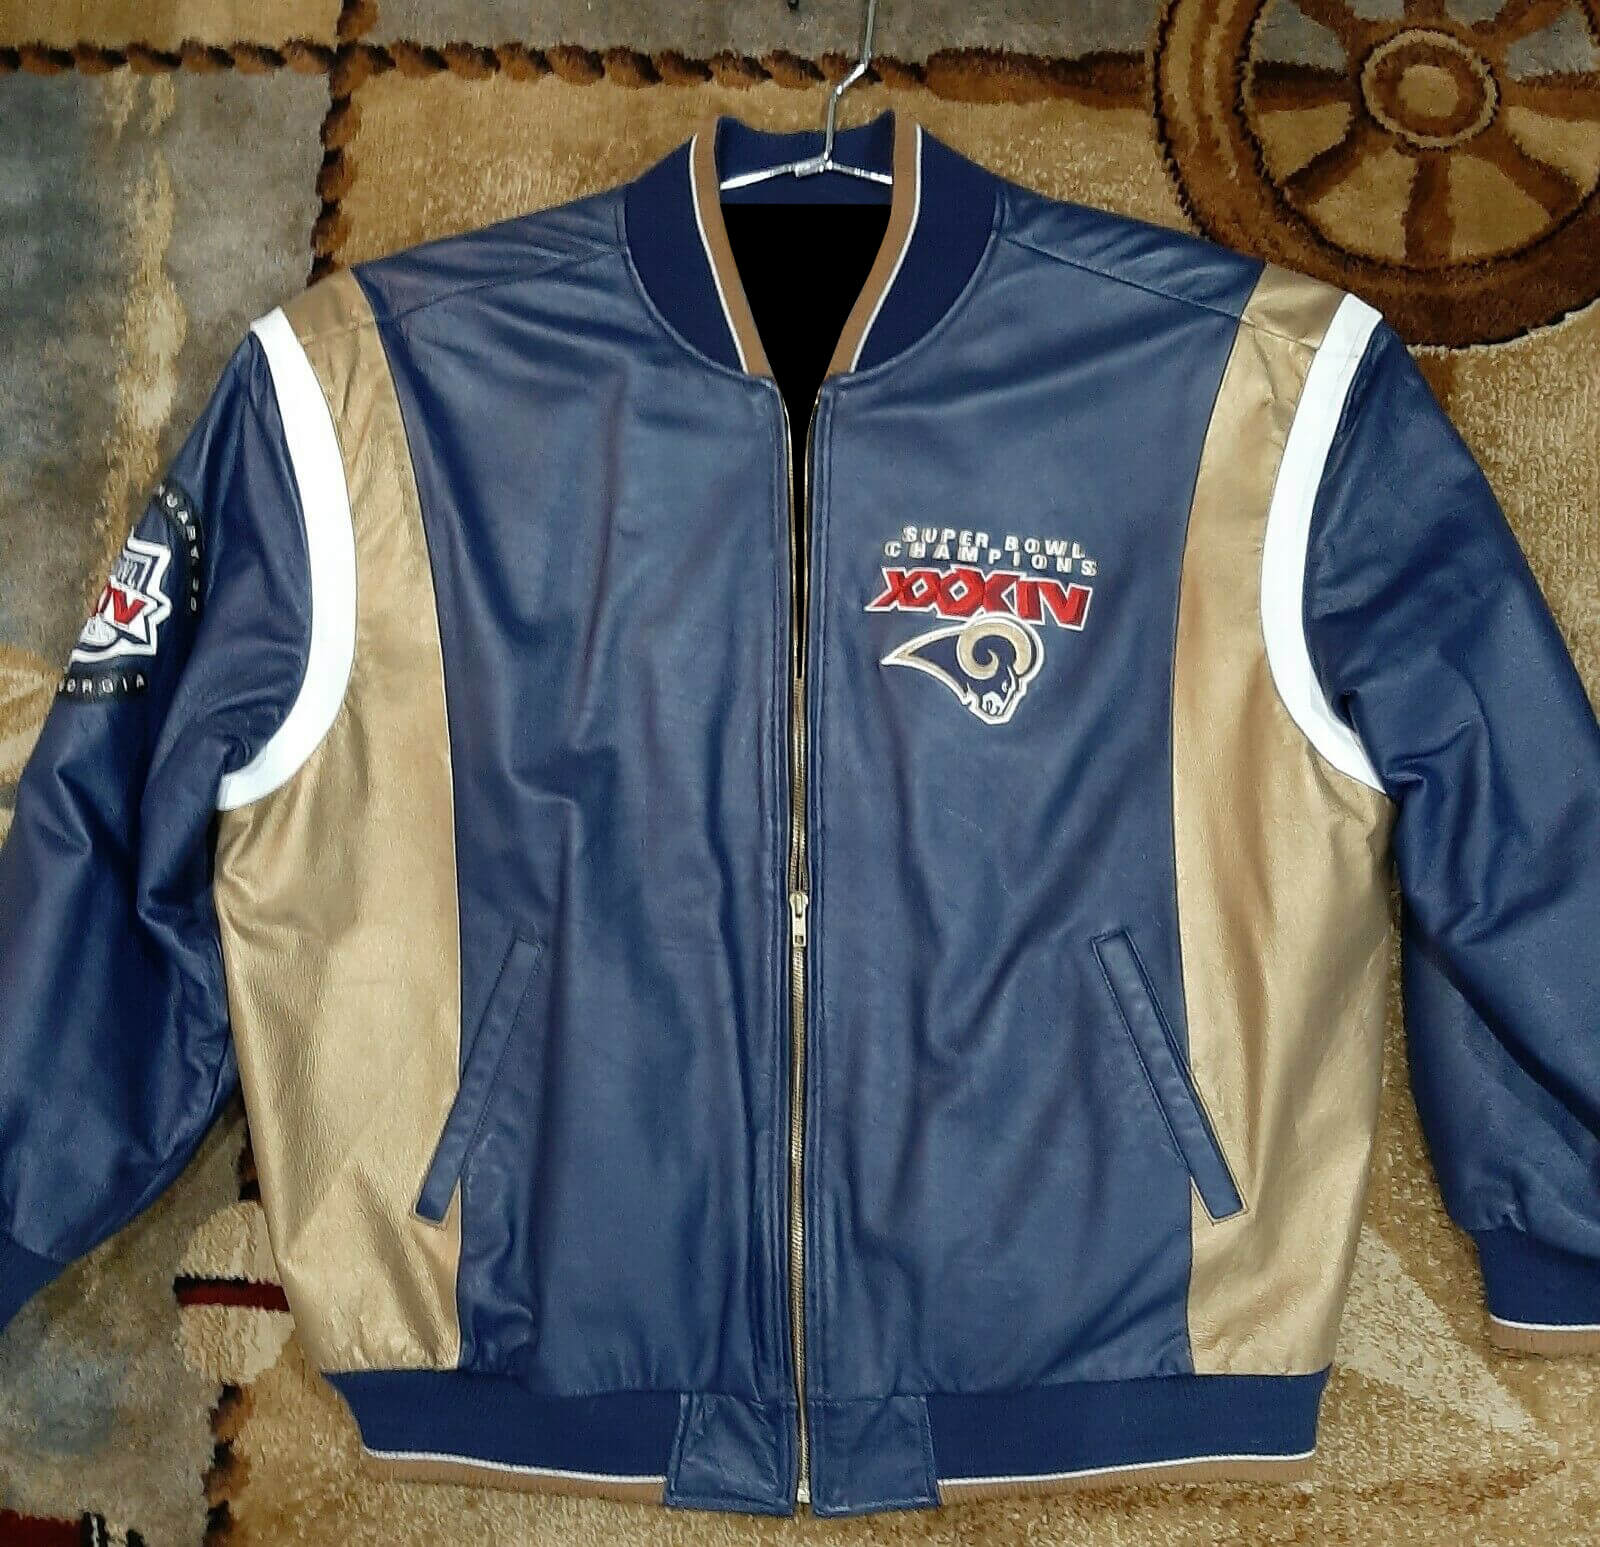 St. Louis Rams Super Bowl Champion Varsity Jacket - Maker of Jacket